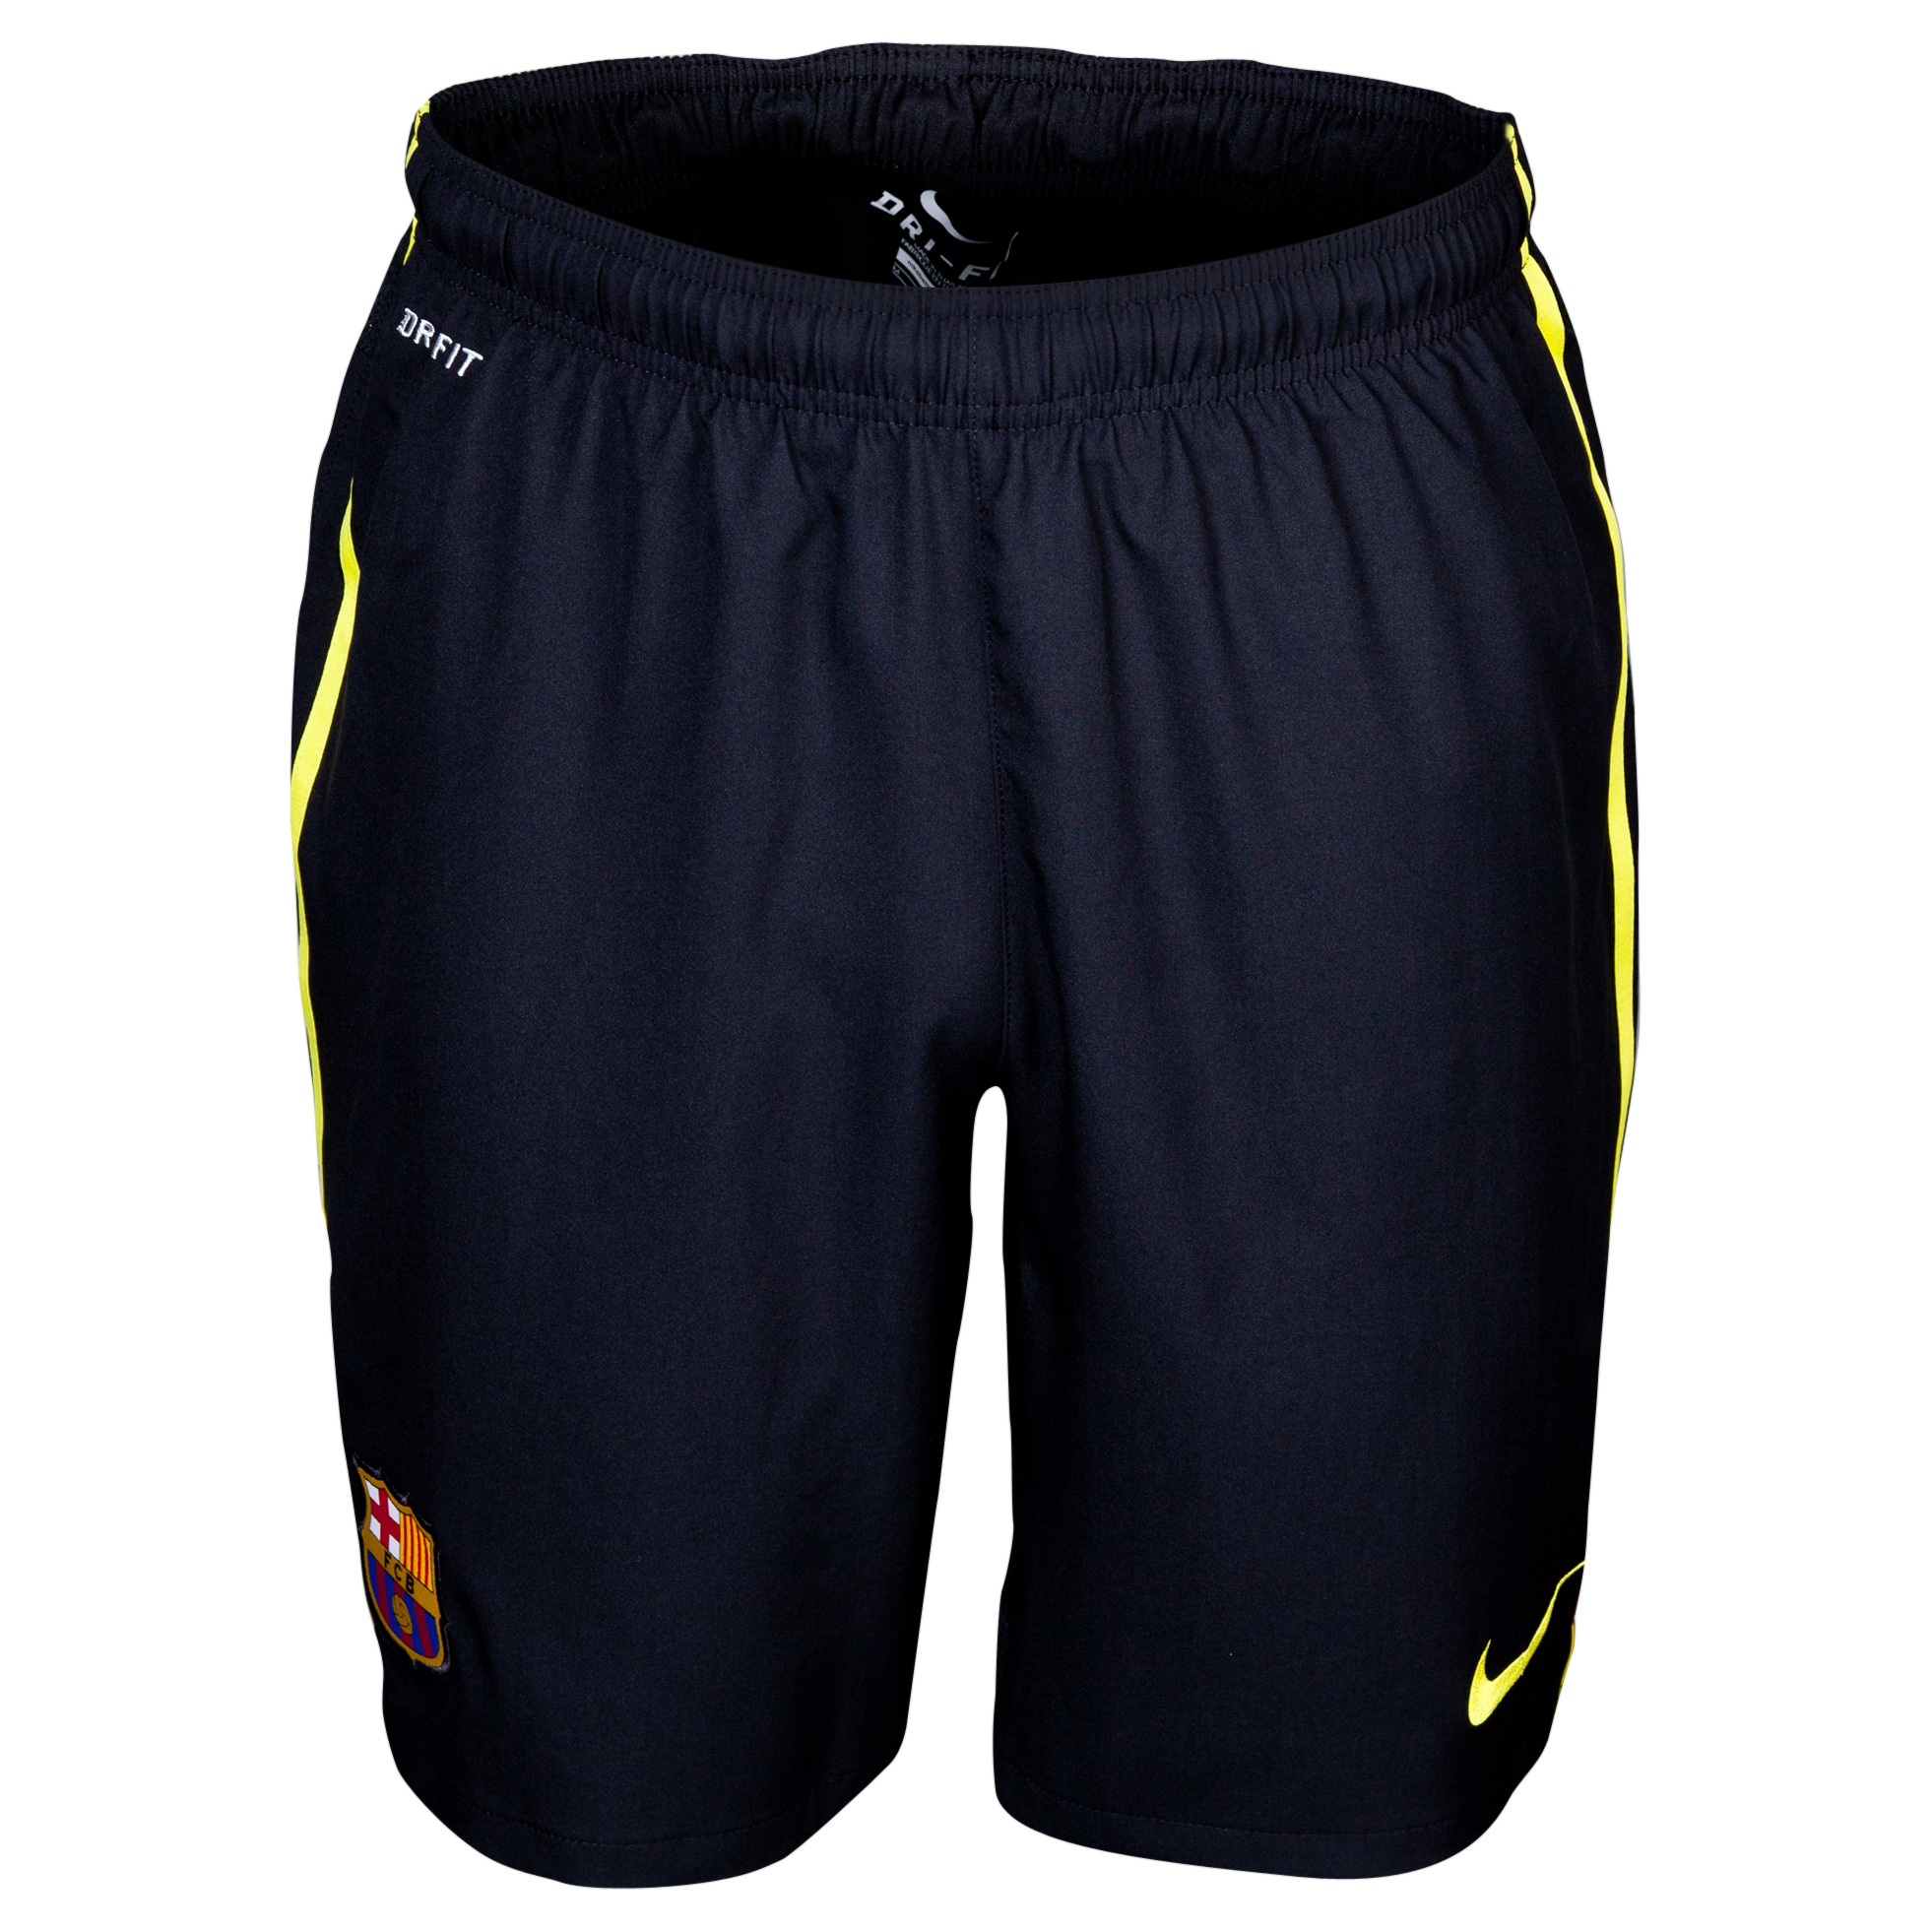 Barcelona Third Shorts 2013/14